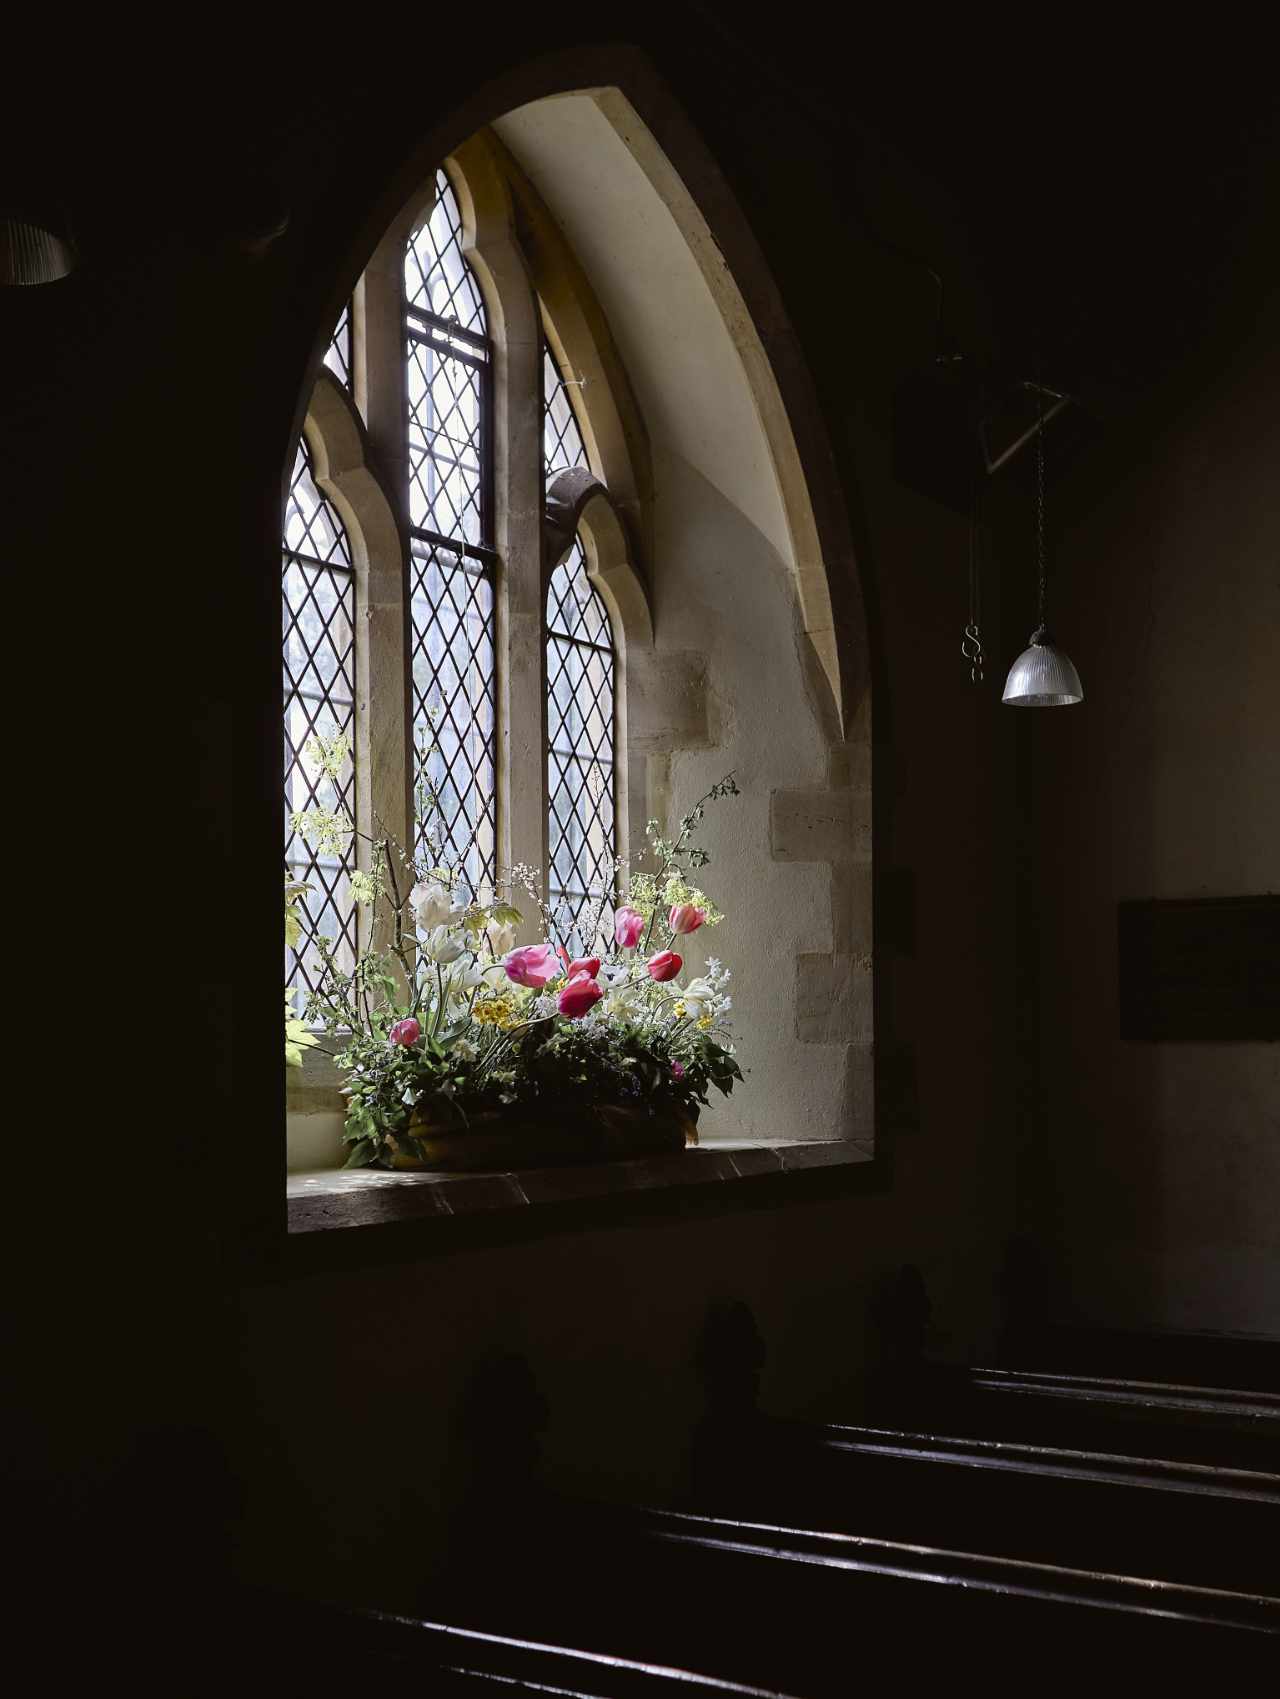 Church window with wedding flowers illuminated